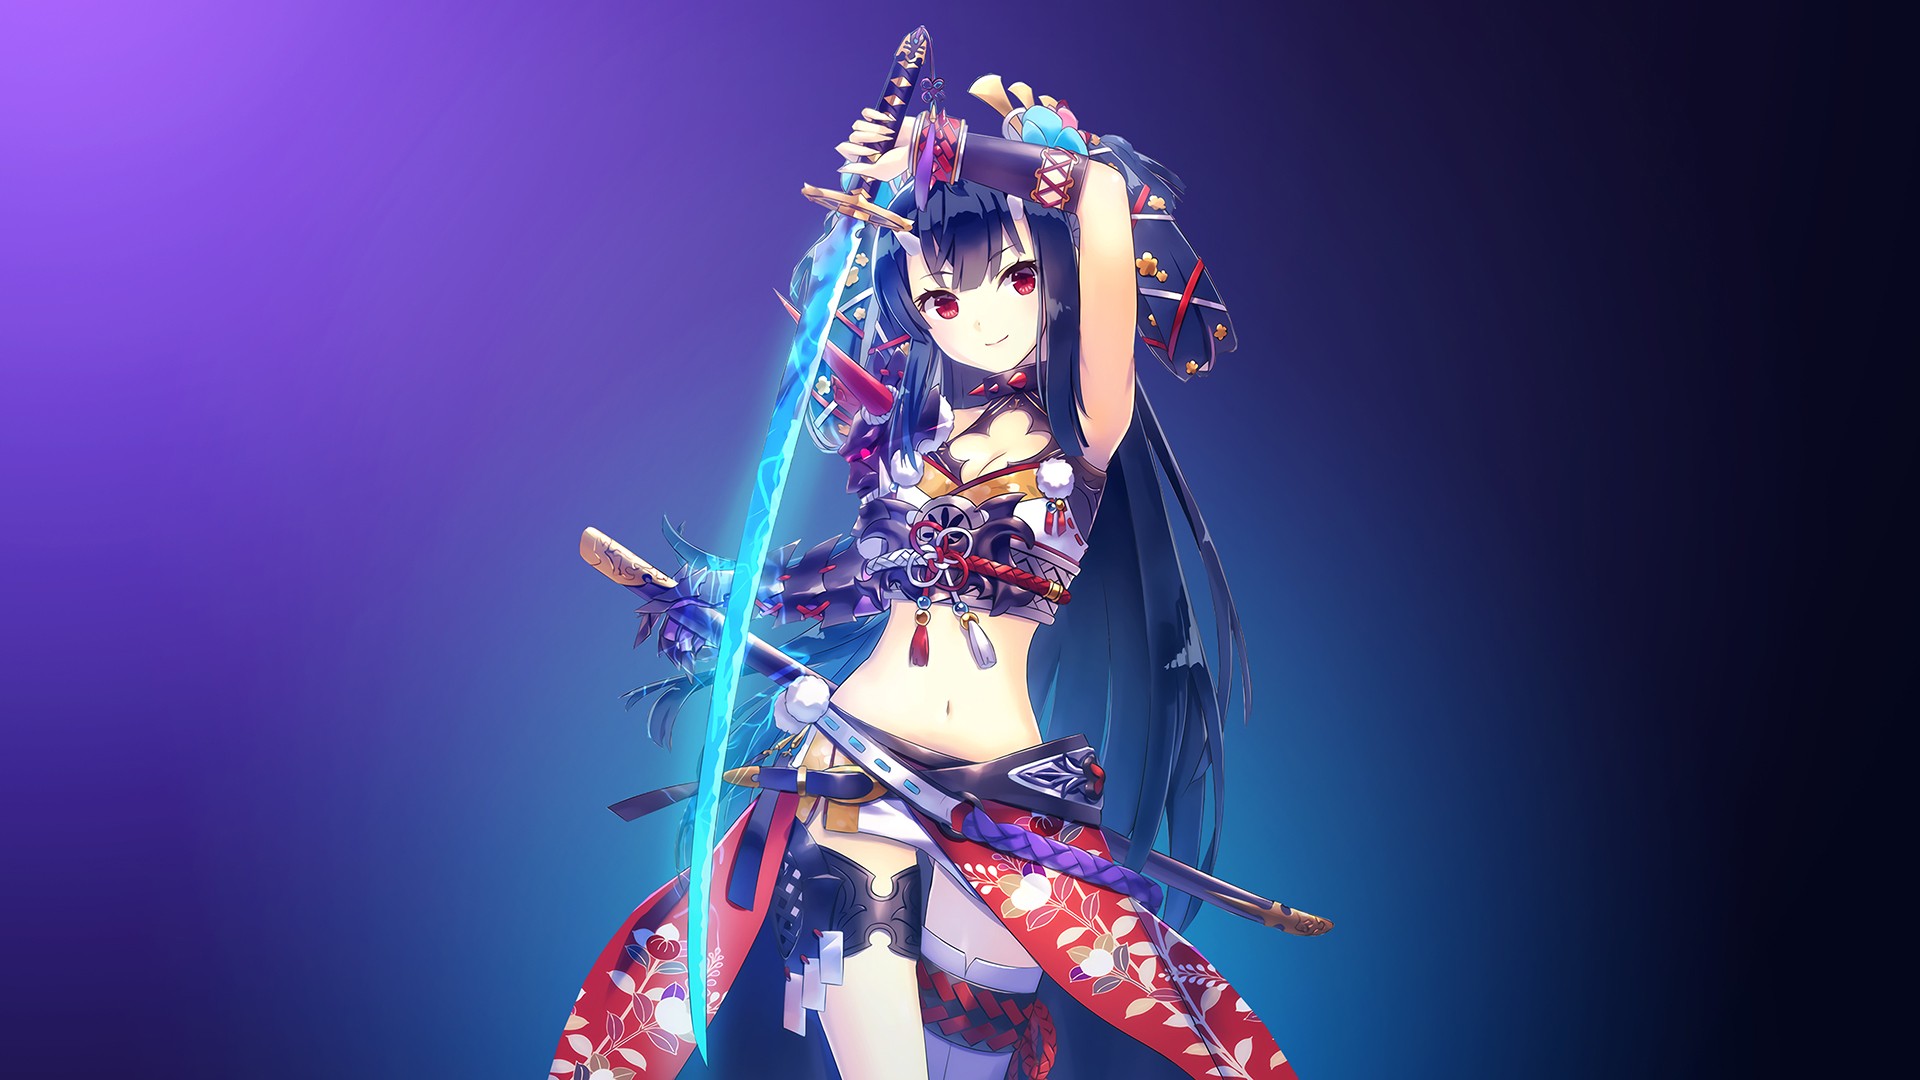 Wallpaper Hot anime girl with sword